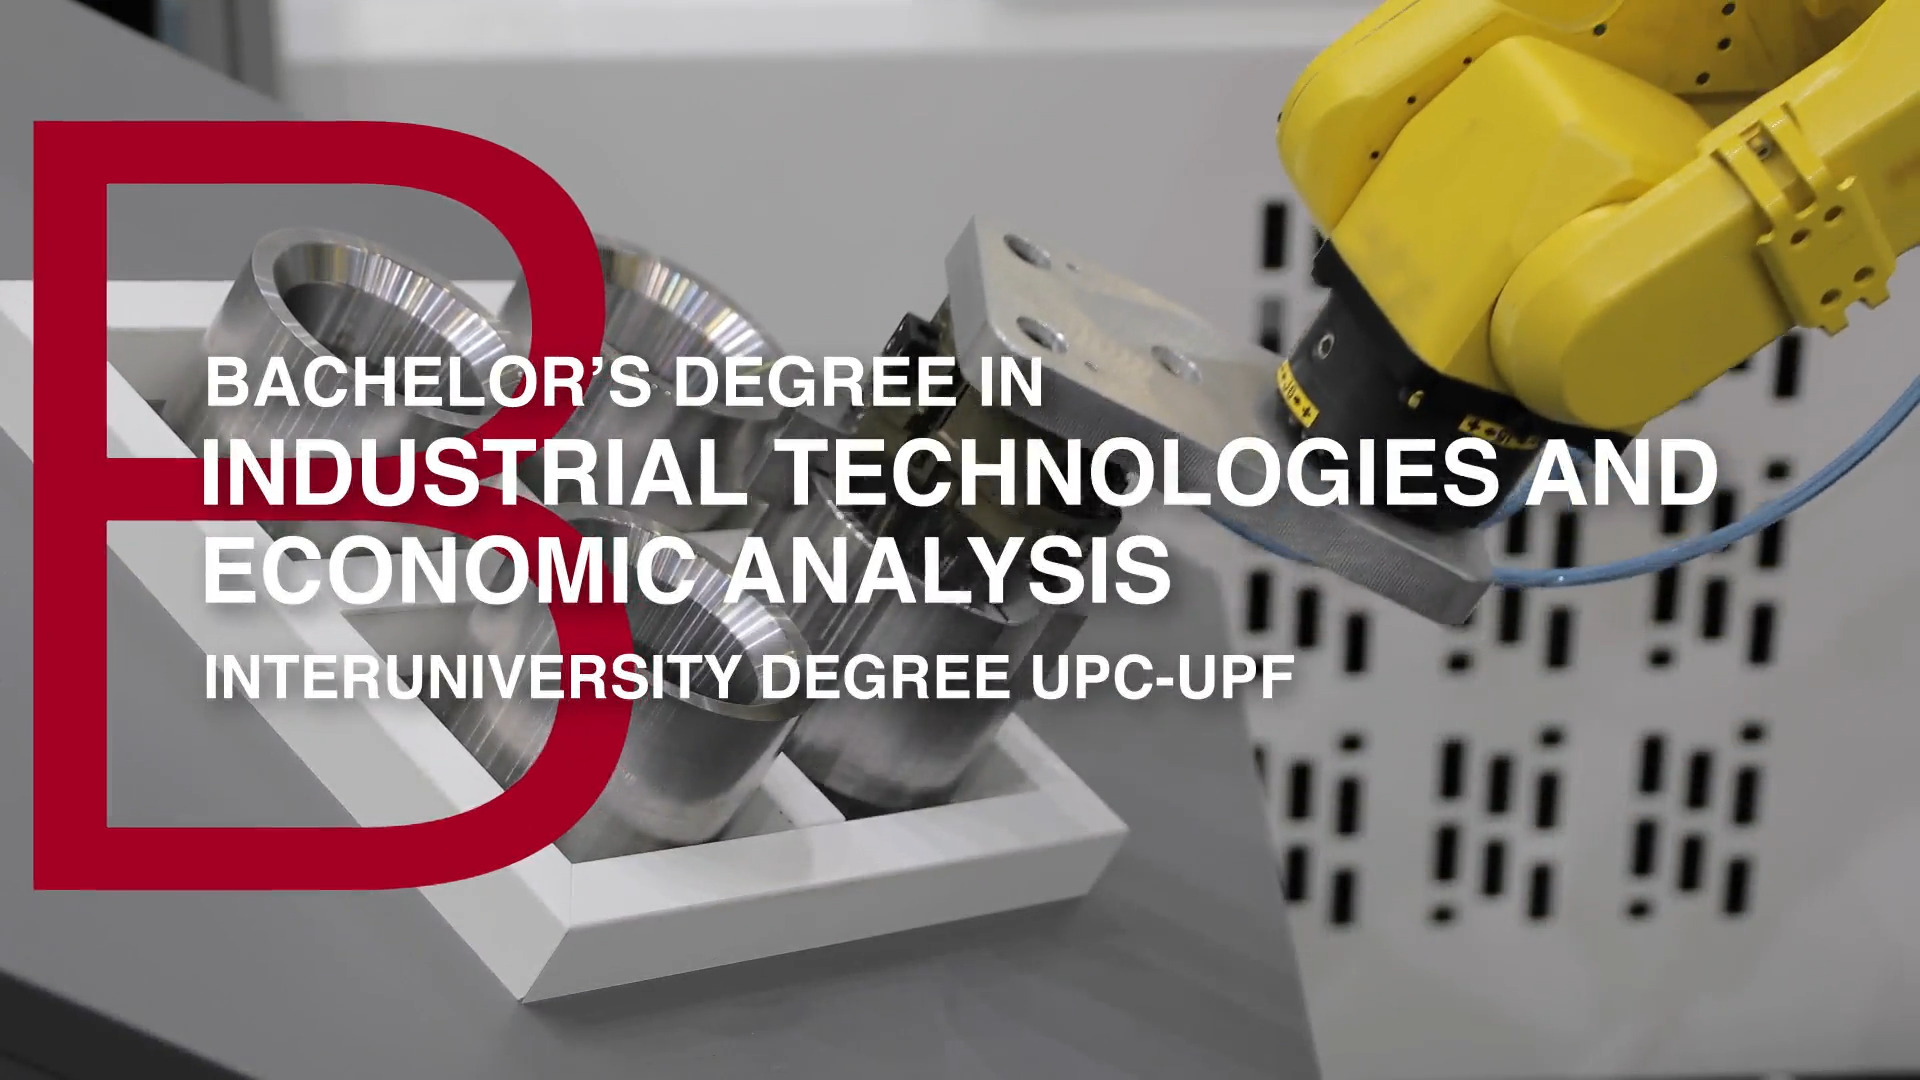 Estudia el Bachelor's Degree in Industrial Technologies and Economic Analysis (Interuniversity degree UPC-UPF) a l'ETSEIB